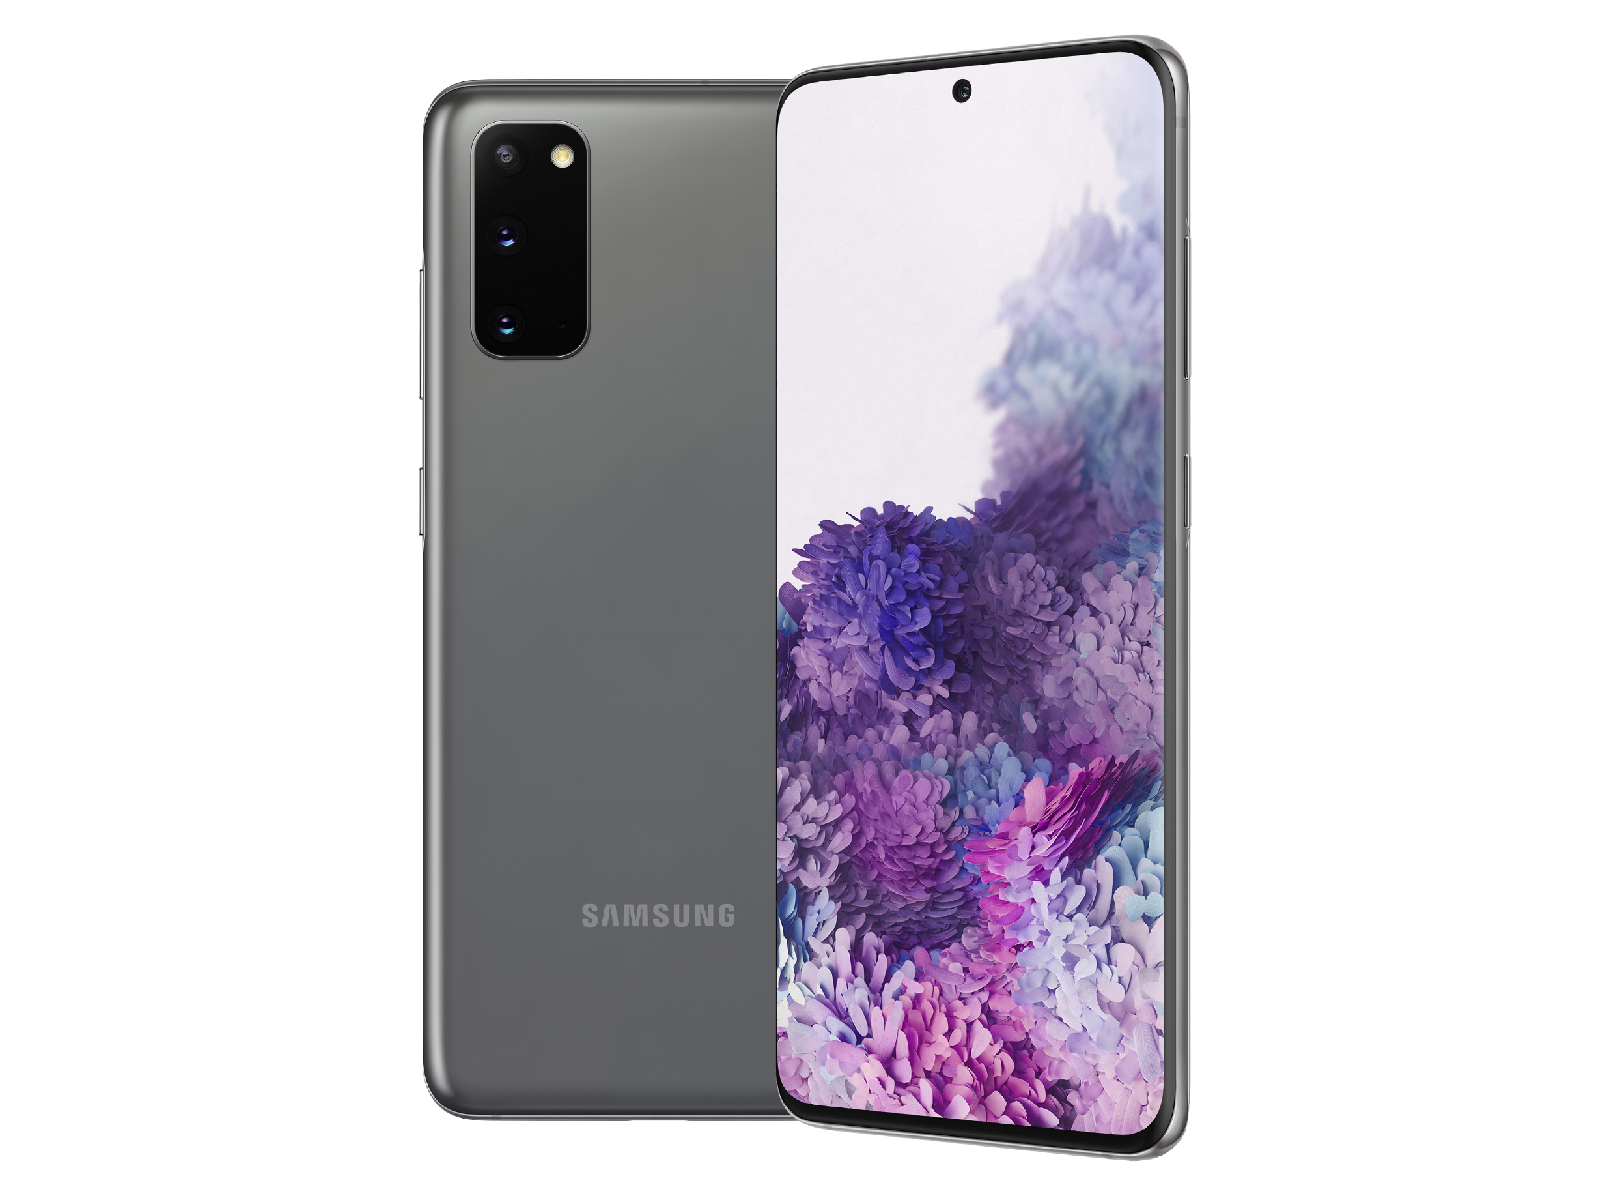 Samsung Galaxy Unpacked 2020: Samsung Galaxy S20, Galaxy 20+ and